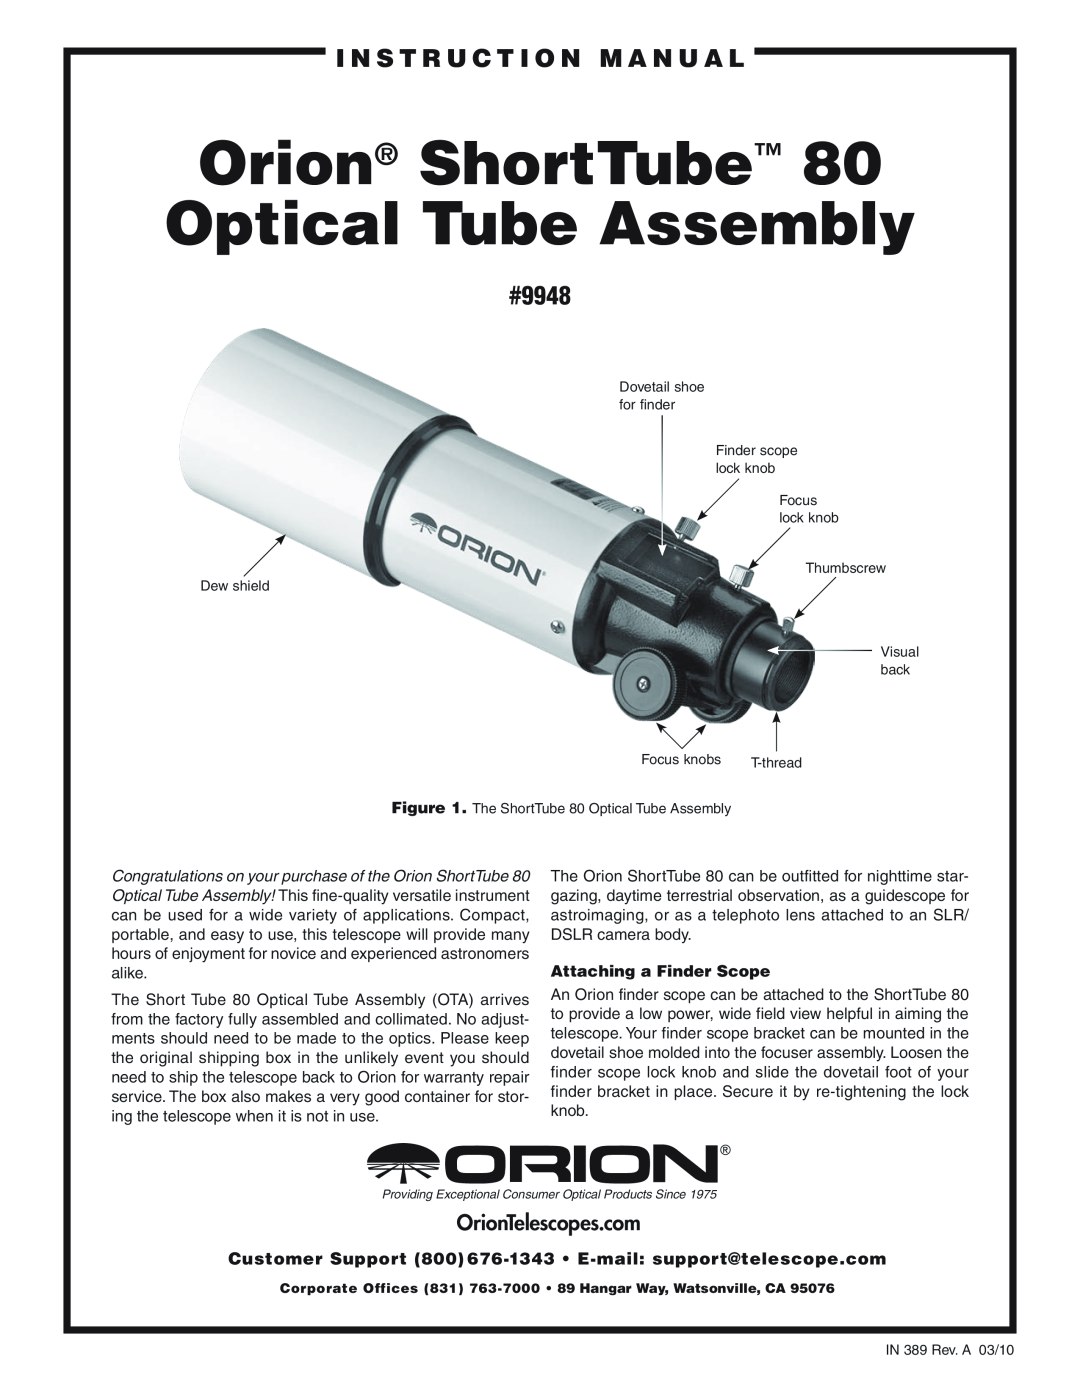 Orion 80 instruction manual i n s t r u c t i o n M a n u a l, #9948, Orion ShortTube Optical Tube Assembly 